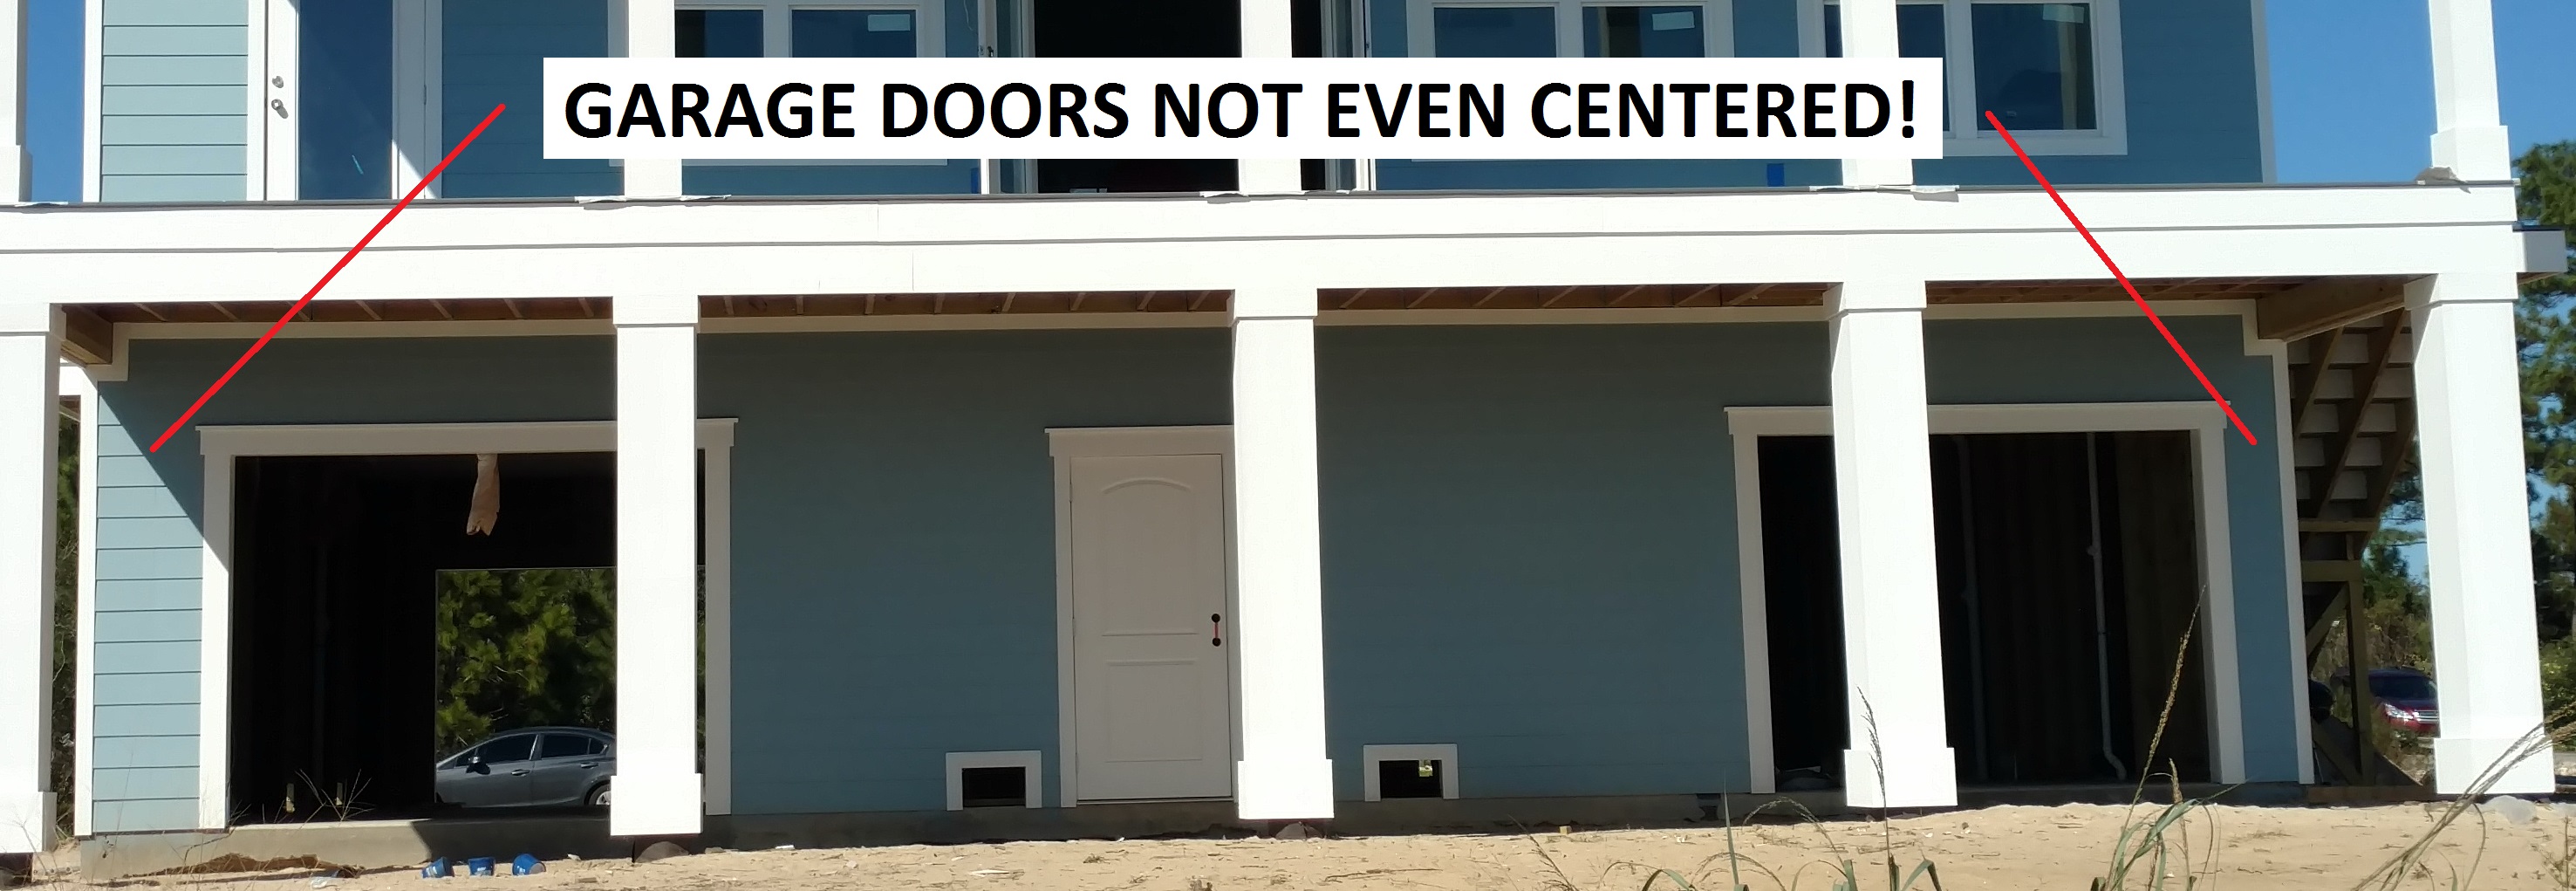 The garage doors are not even!